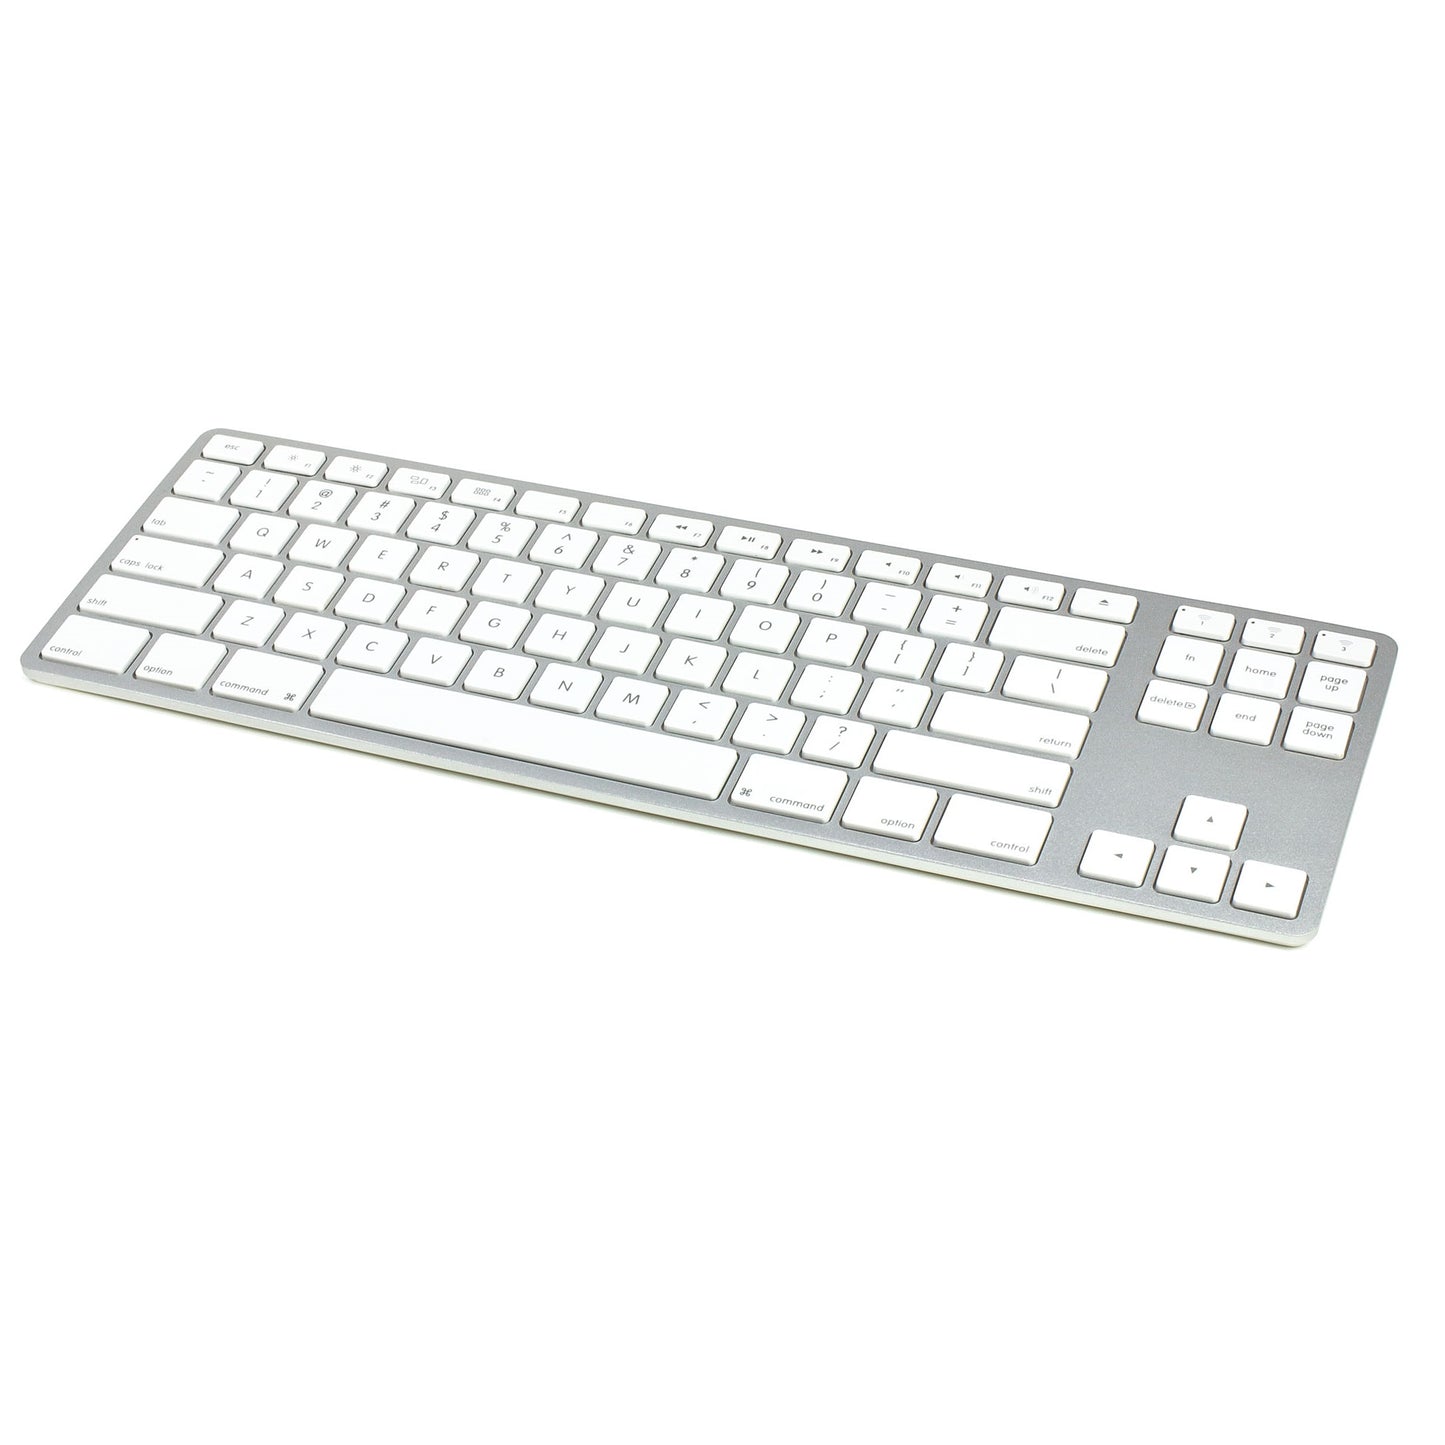 Wireless Aluminum Tenkeyless Keyboard - Silver